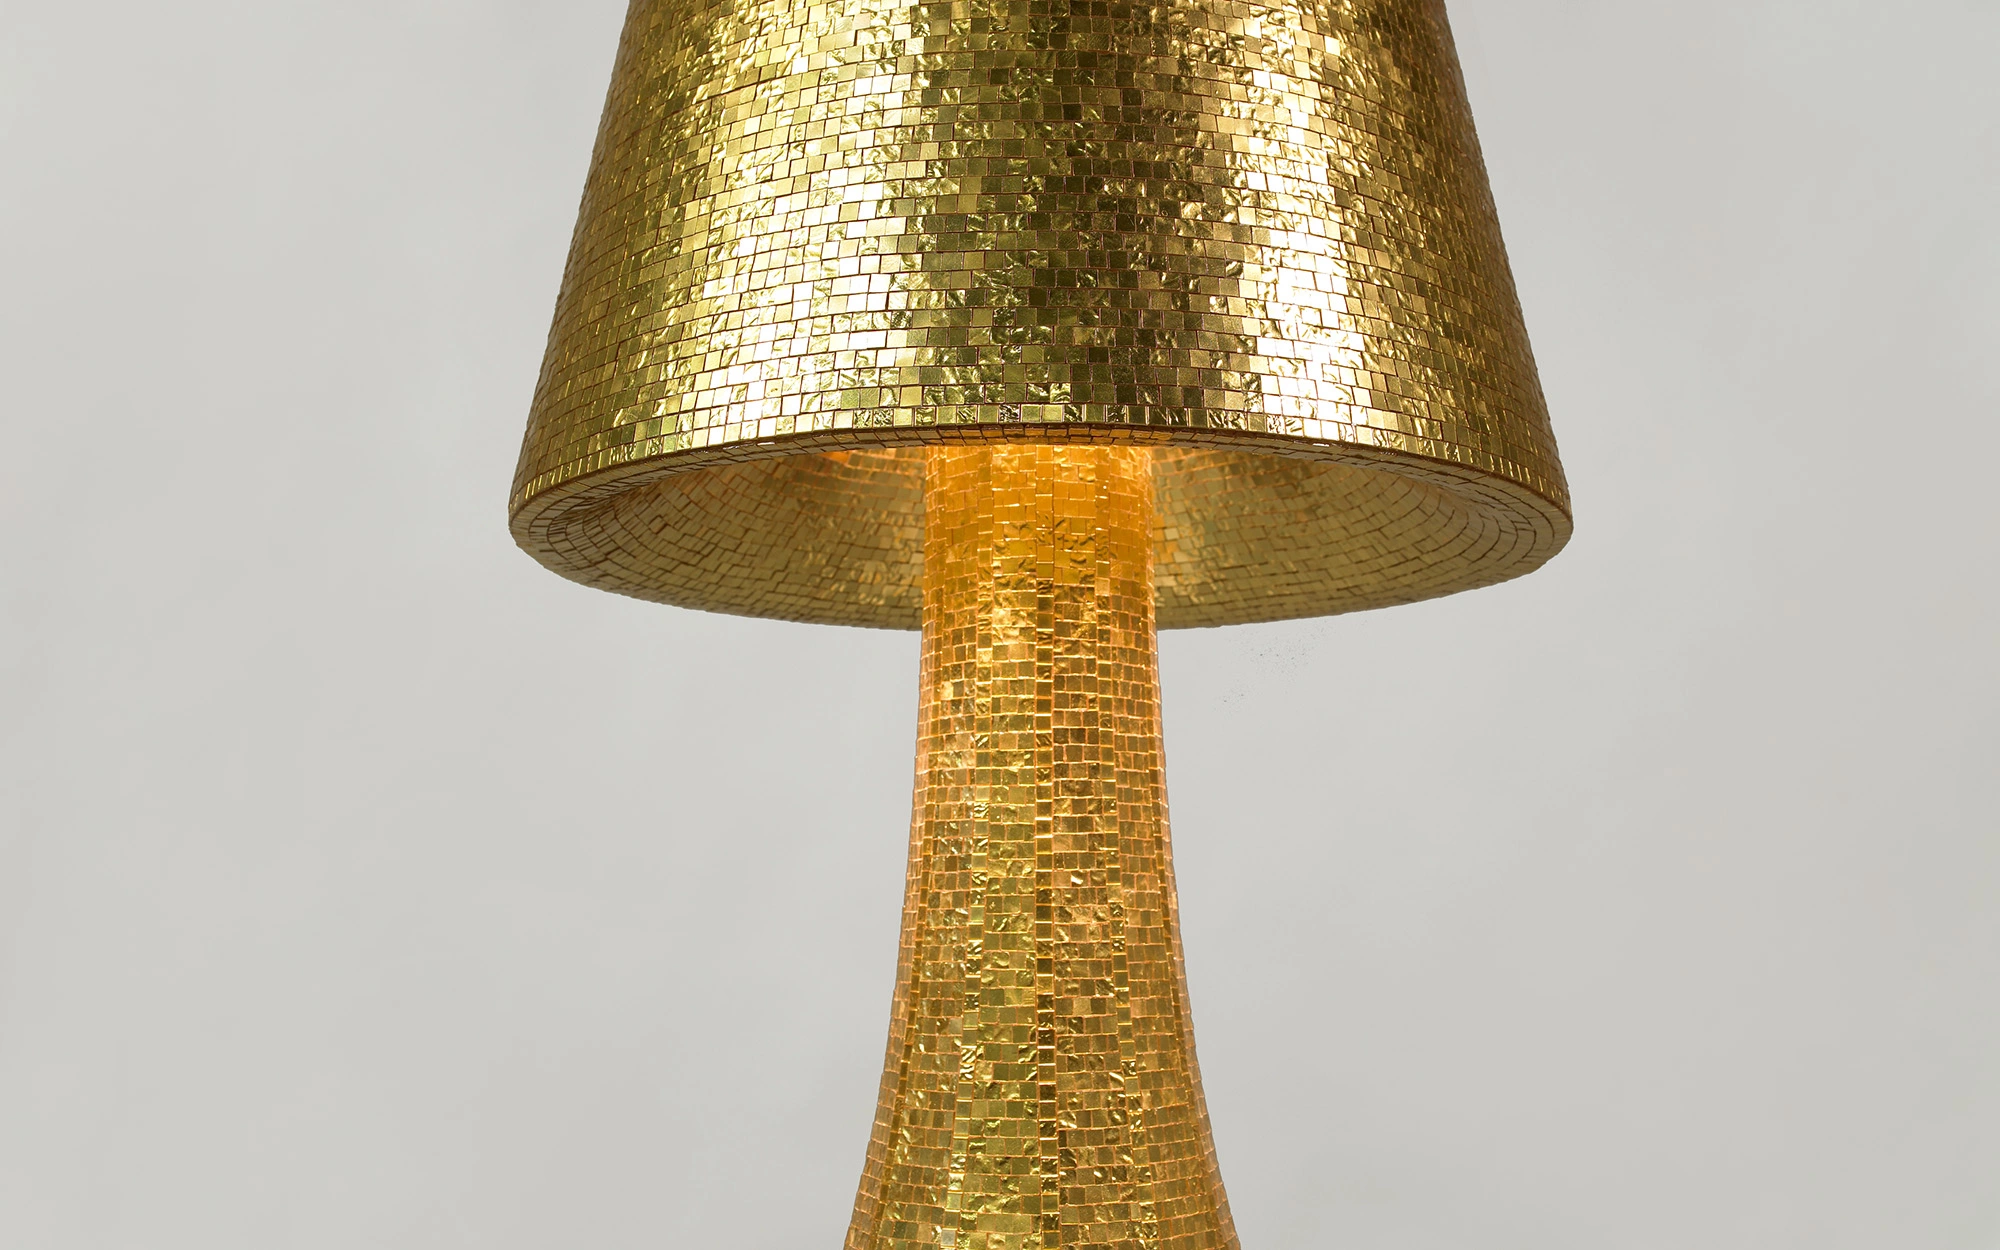 Lampada yellow gold - Alessandro Mendini - Floor light - Galerie kreo